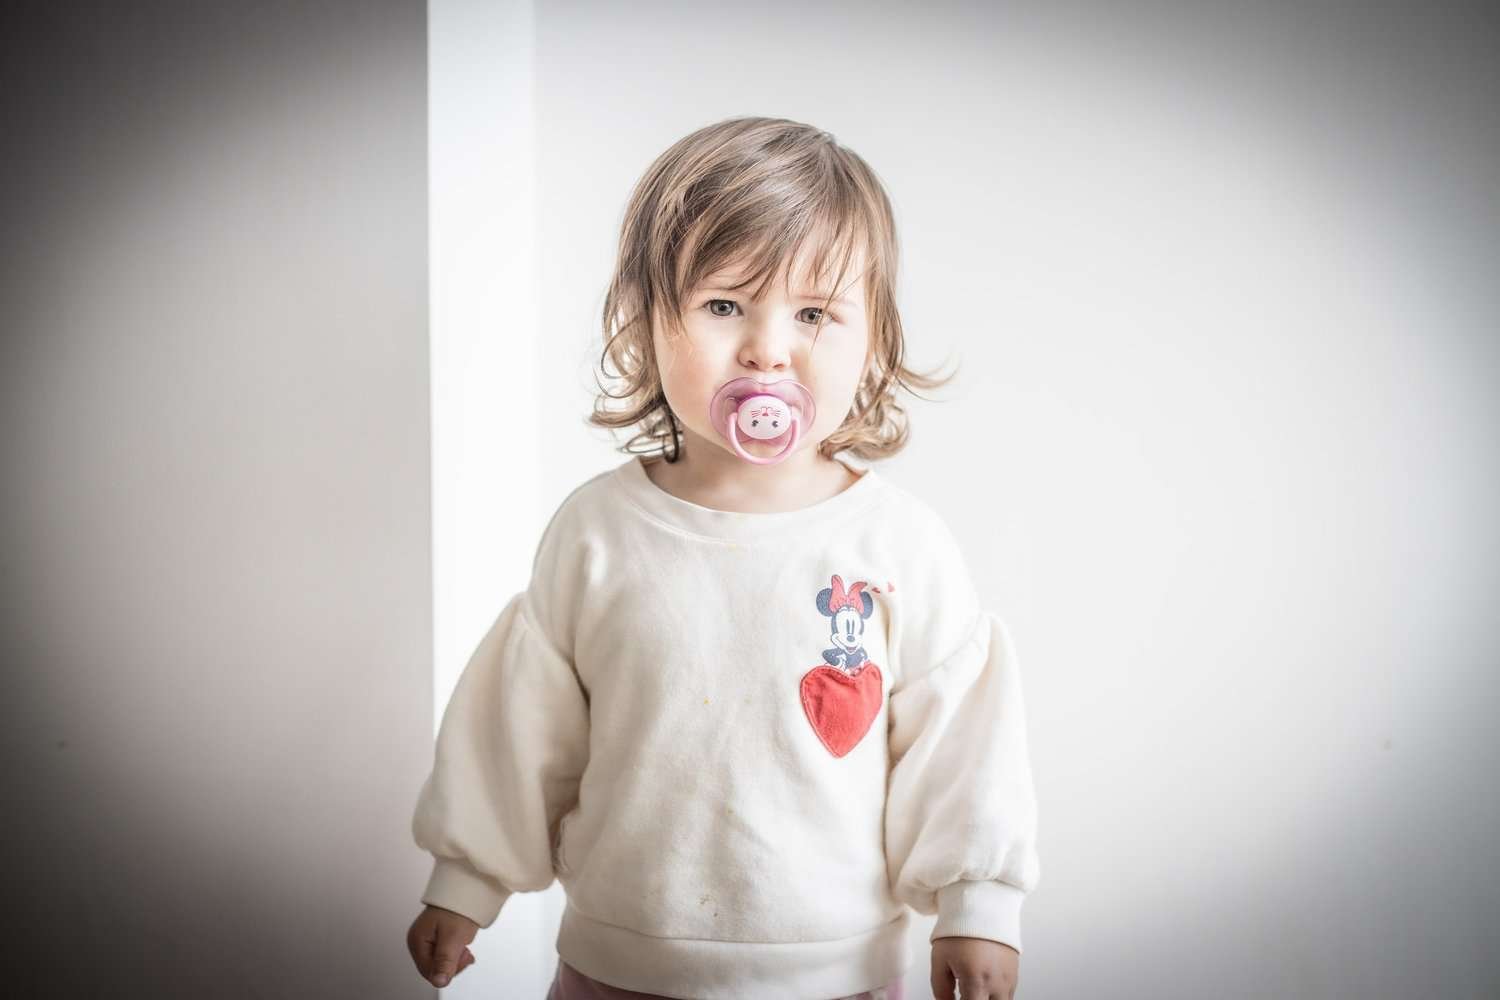 Aggressive behaviors in toddlers